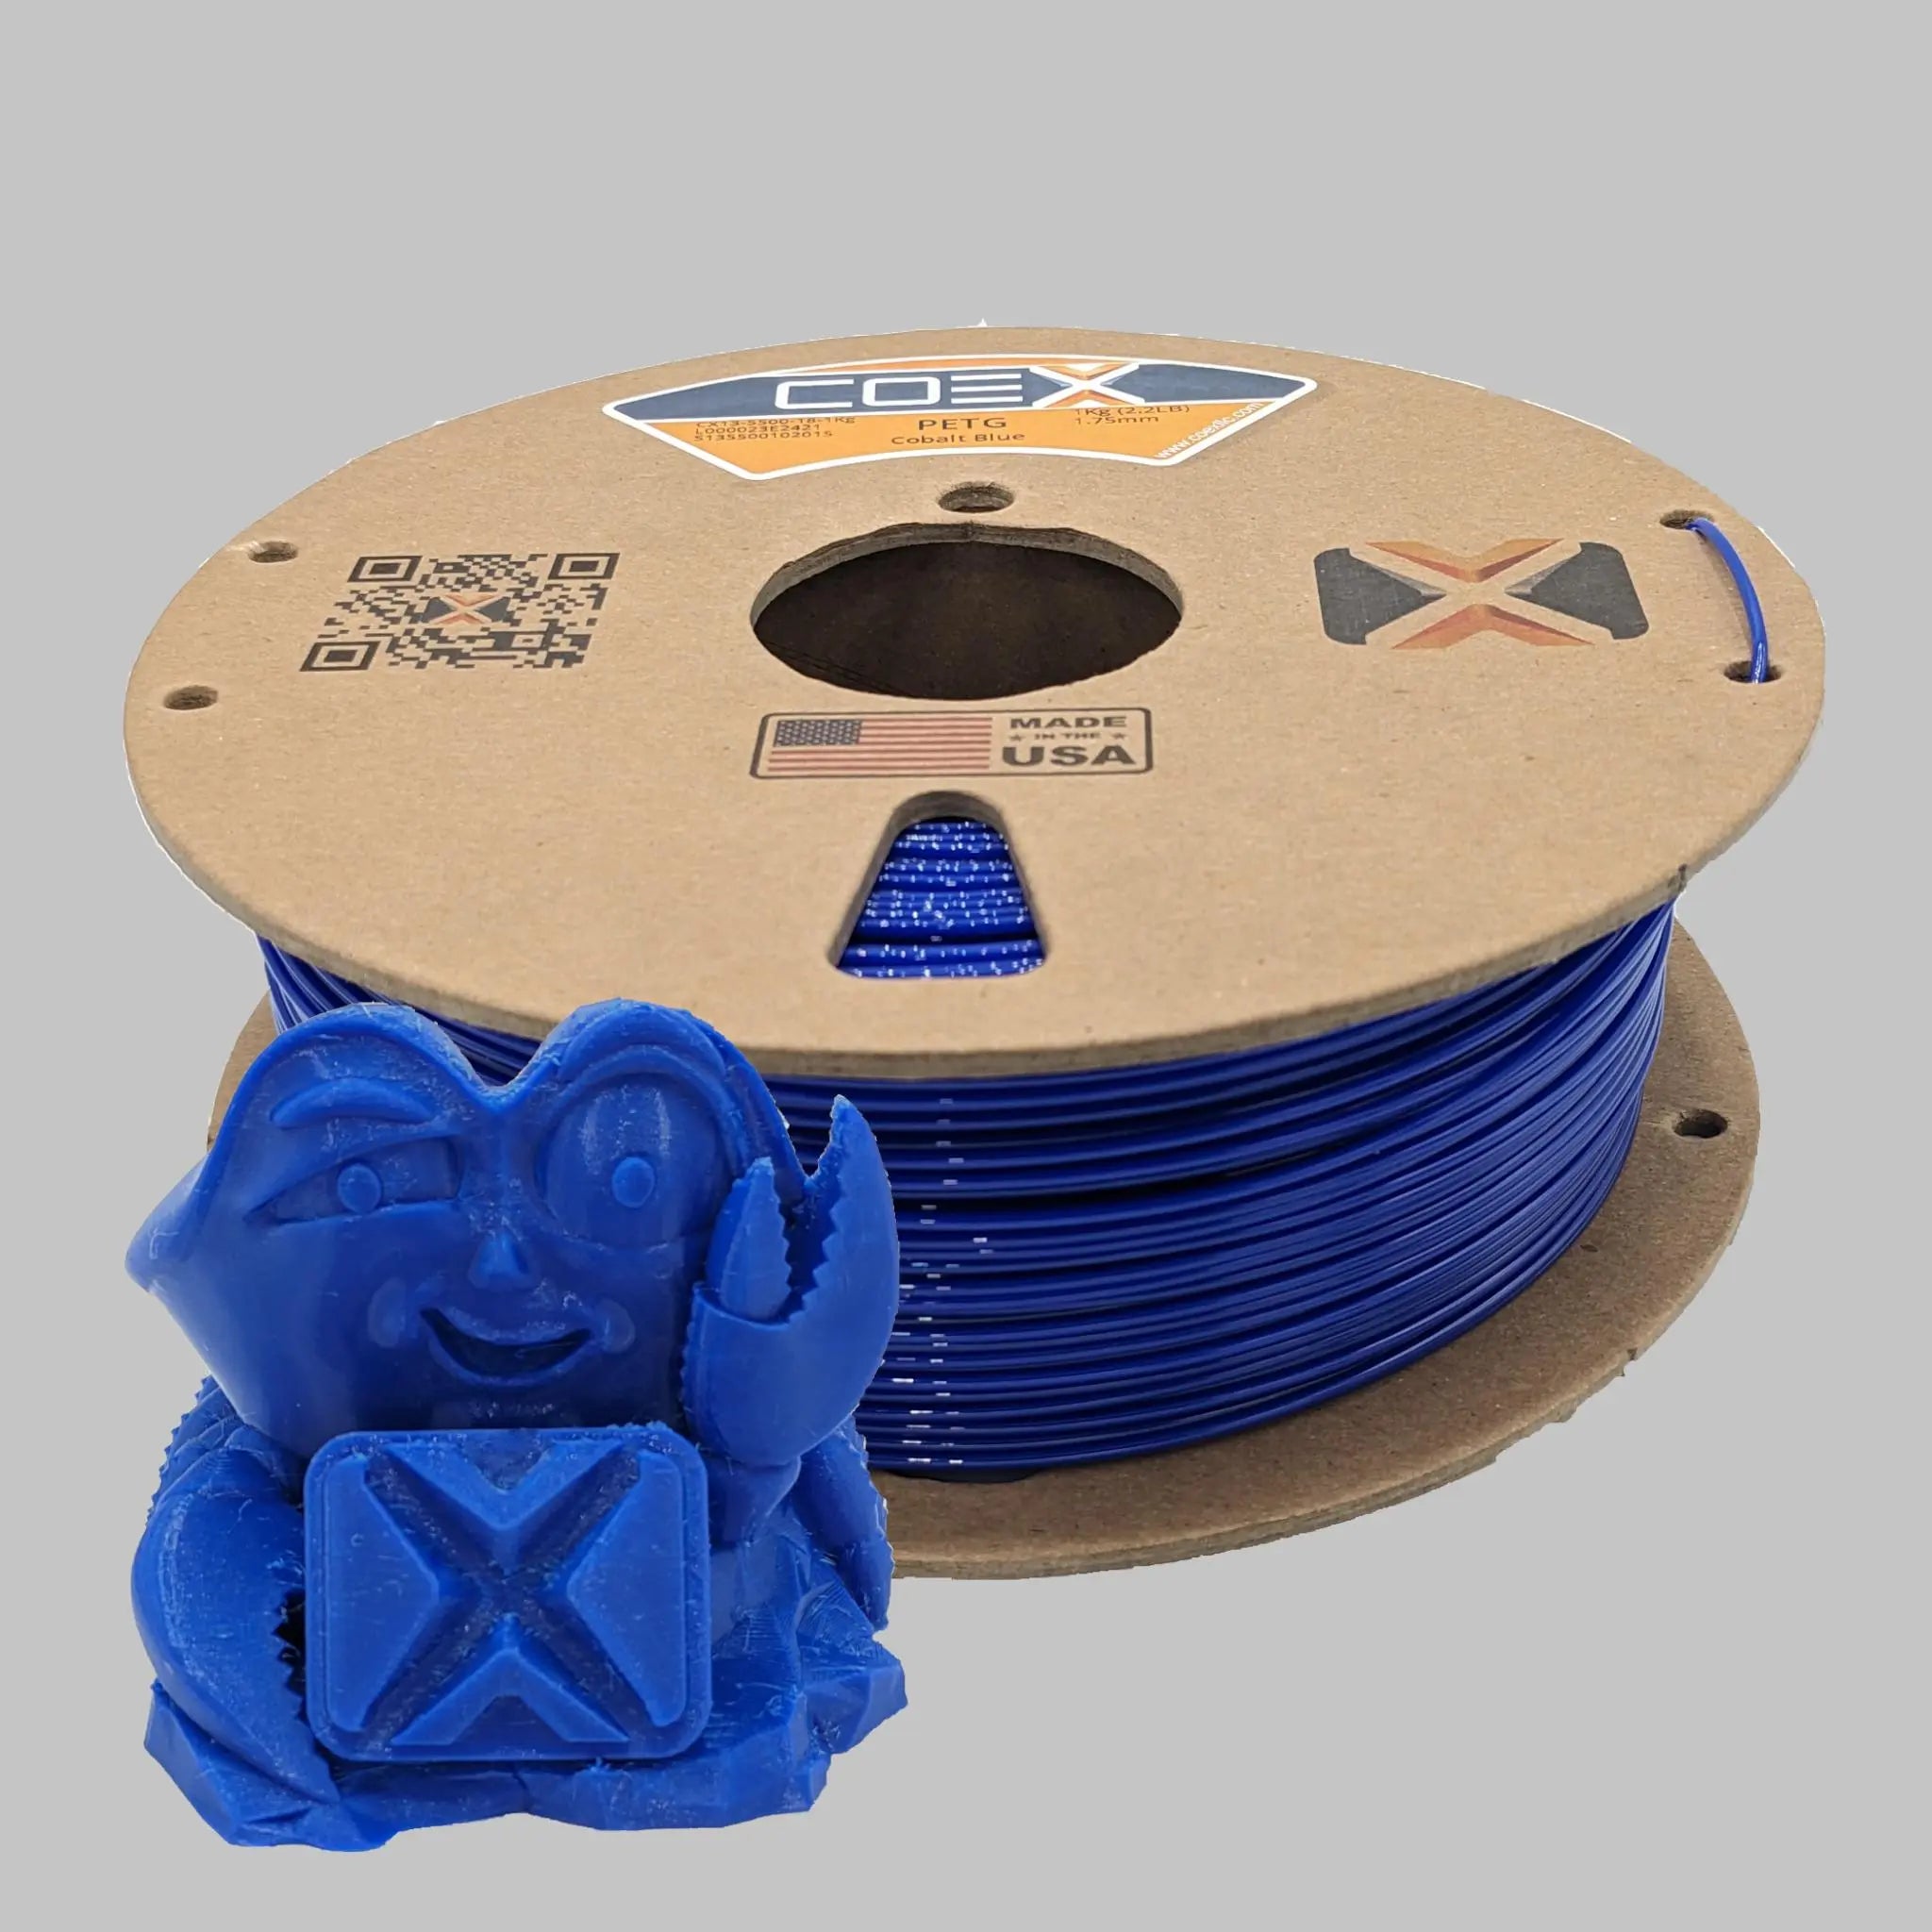 Blue PETG Filament 1.75mm